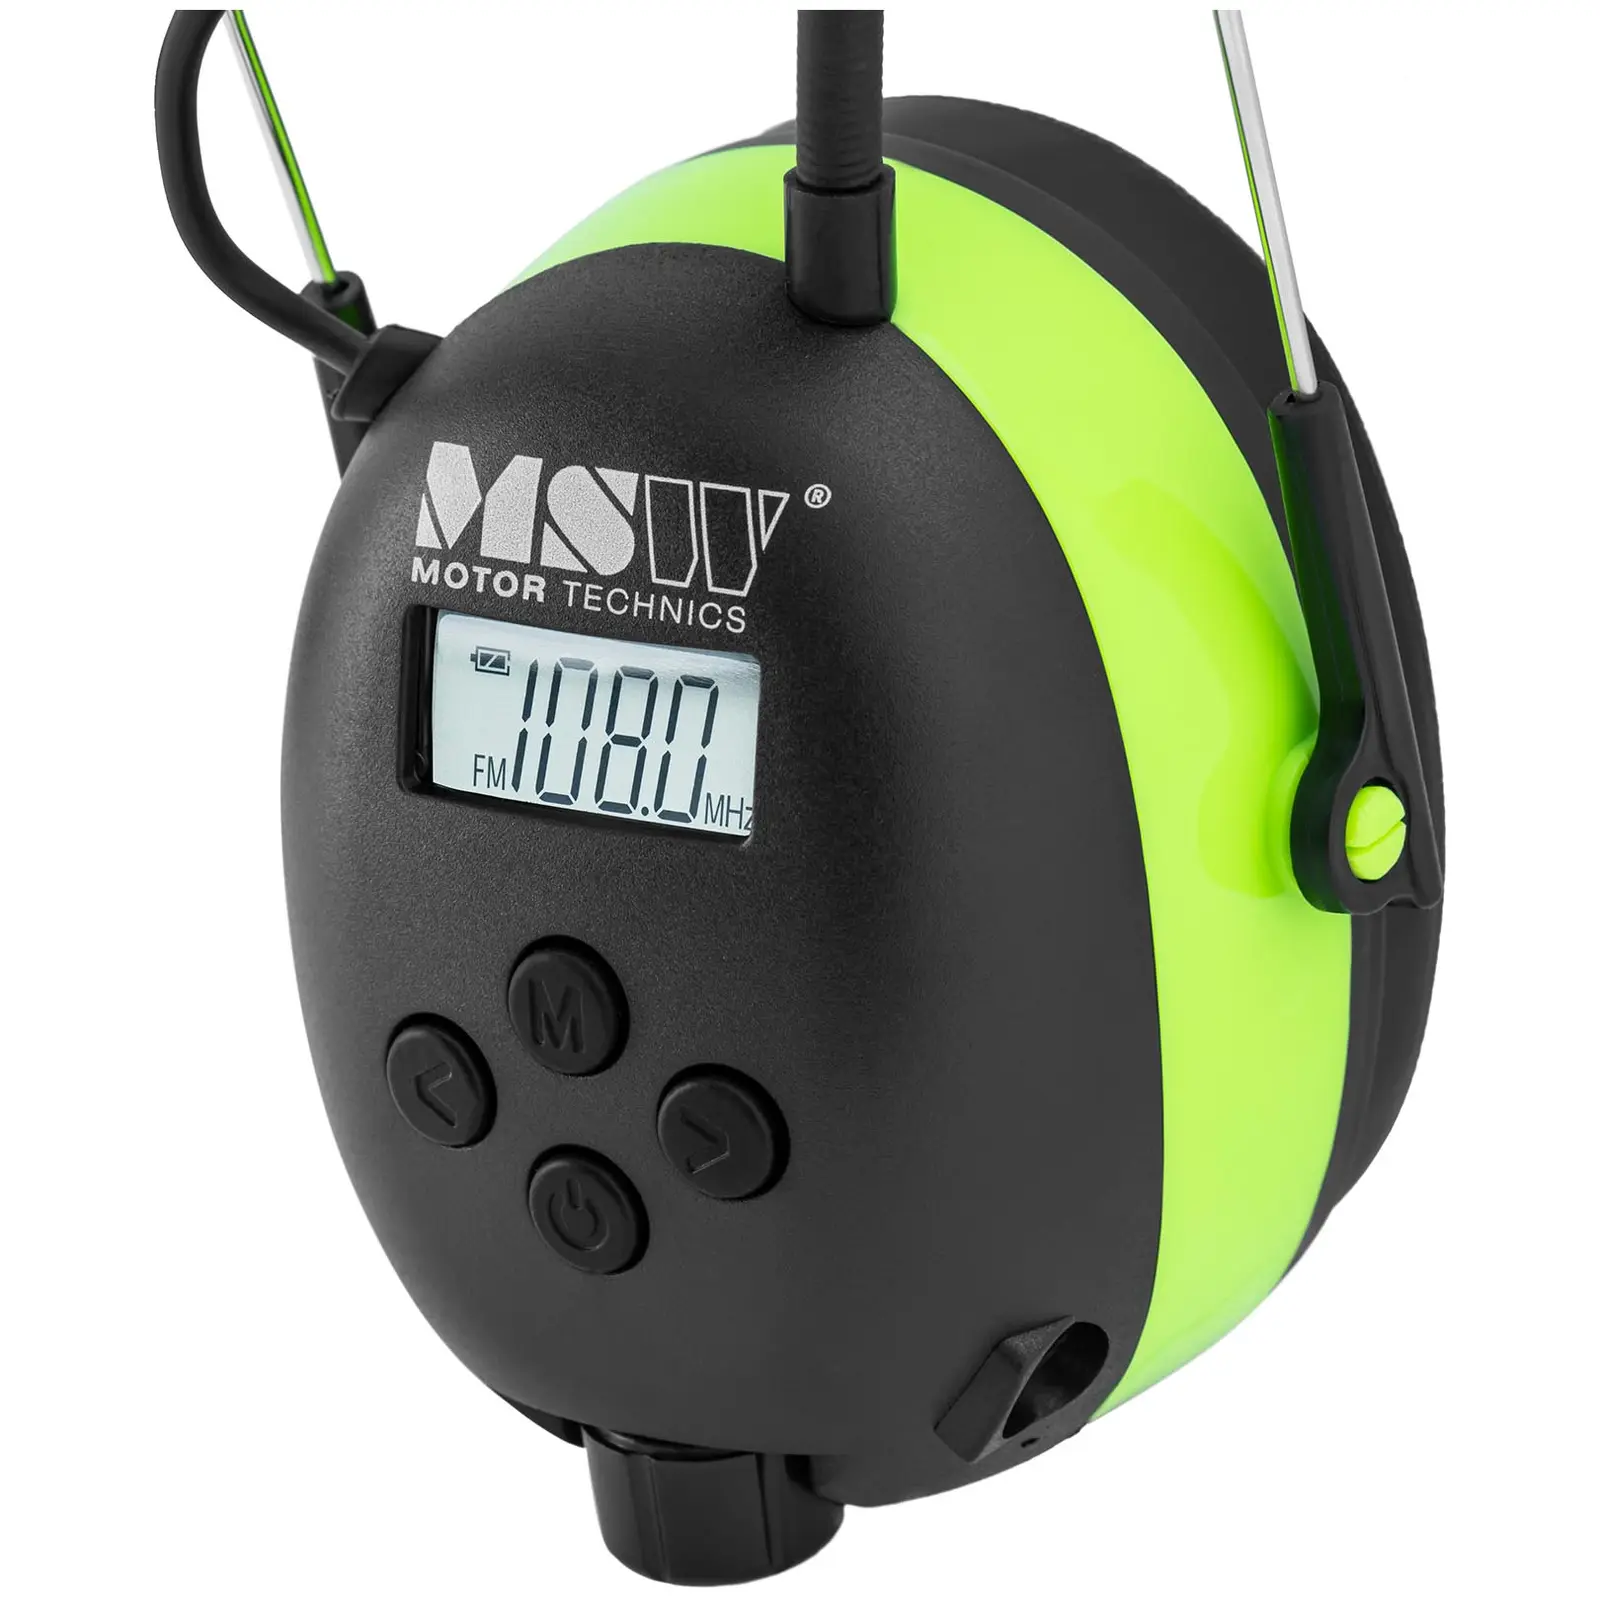 Høreværn med bluetooth - mikrofon - LCD-display - batteri - grønt